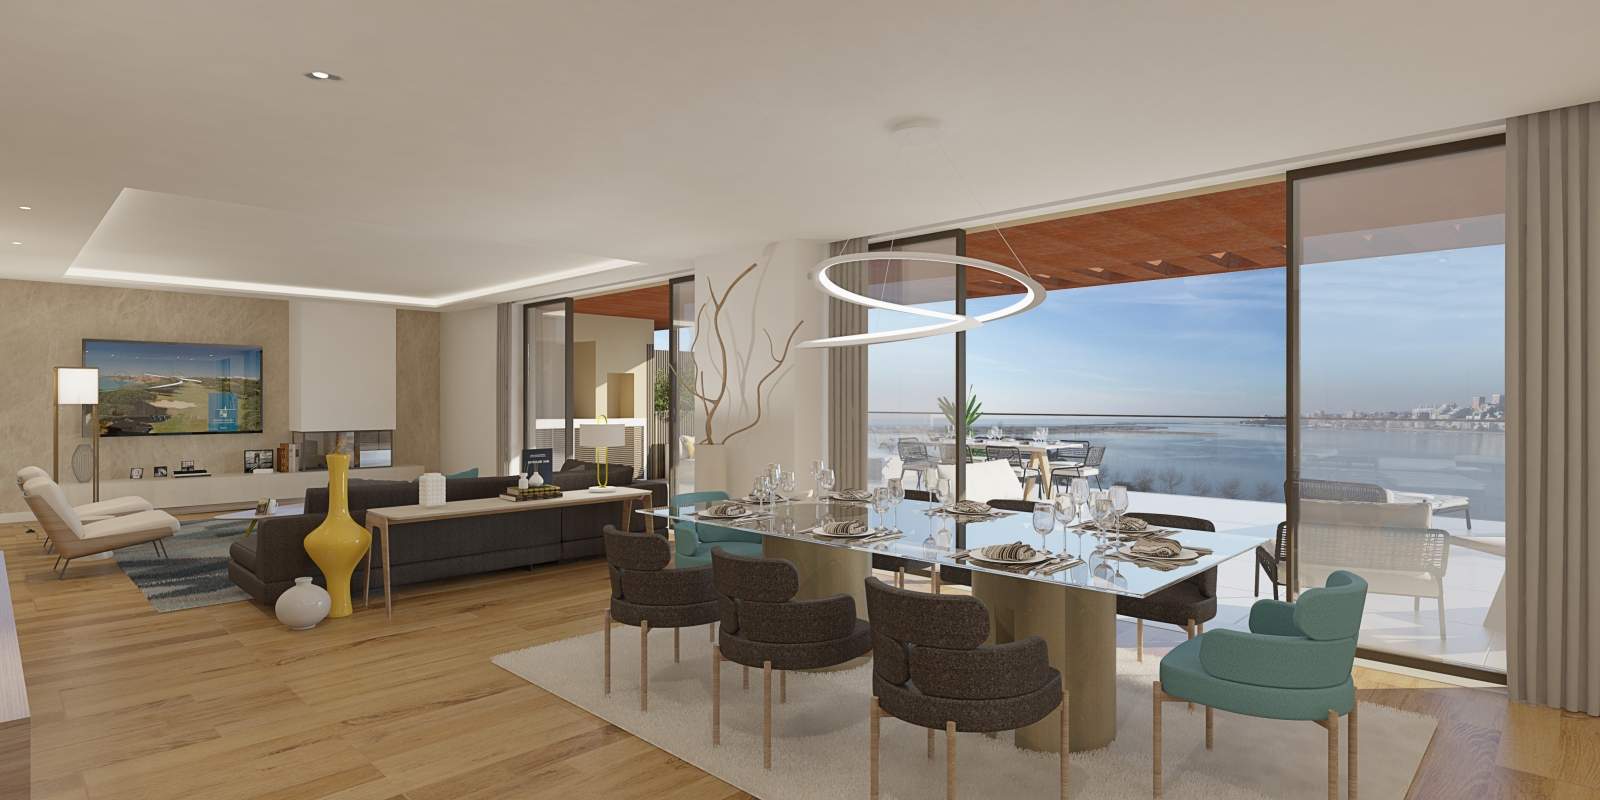 Apartment for sale with terrace, in exclusive condominium, V. N. Gaia, Porto, Portugal_175810